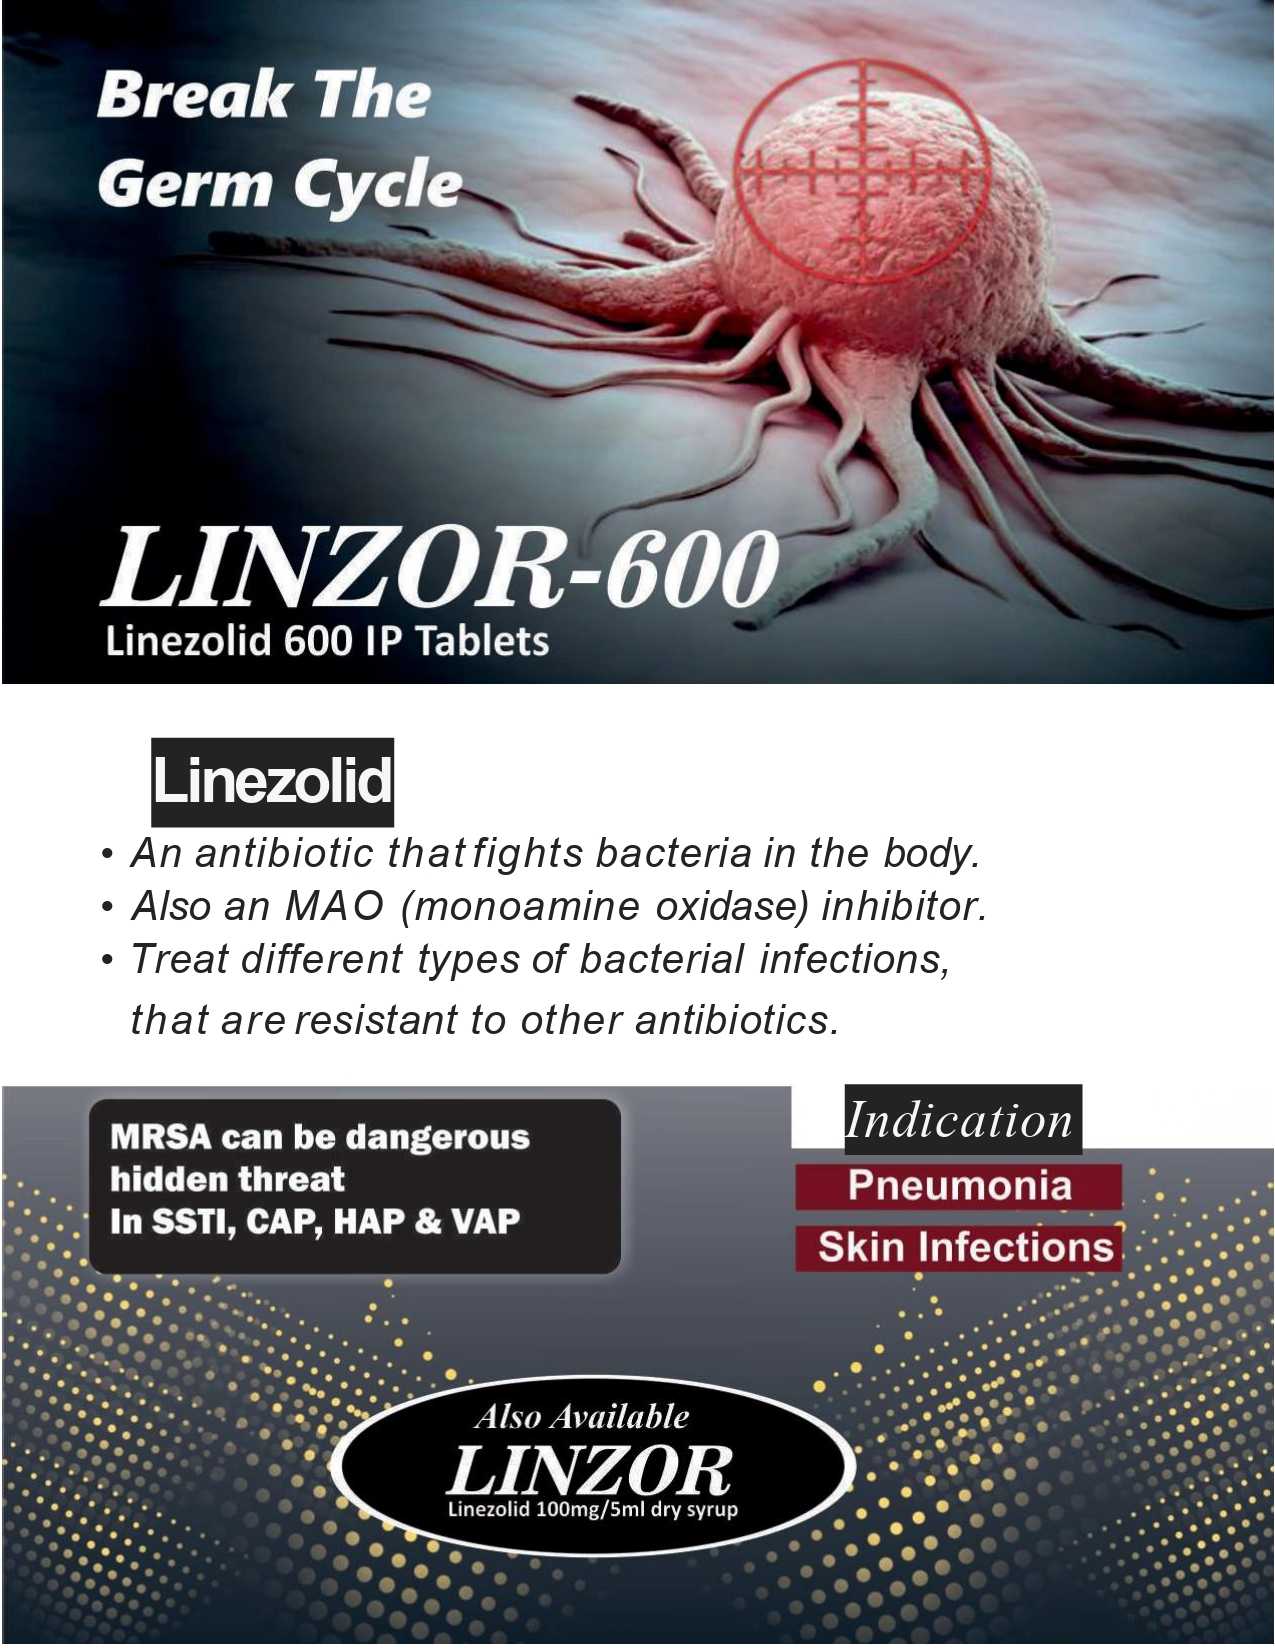 Linzor-600